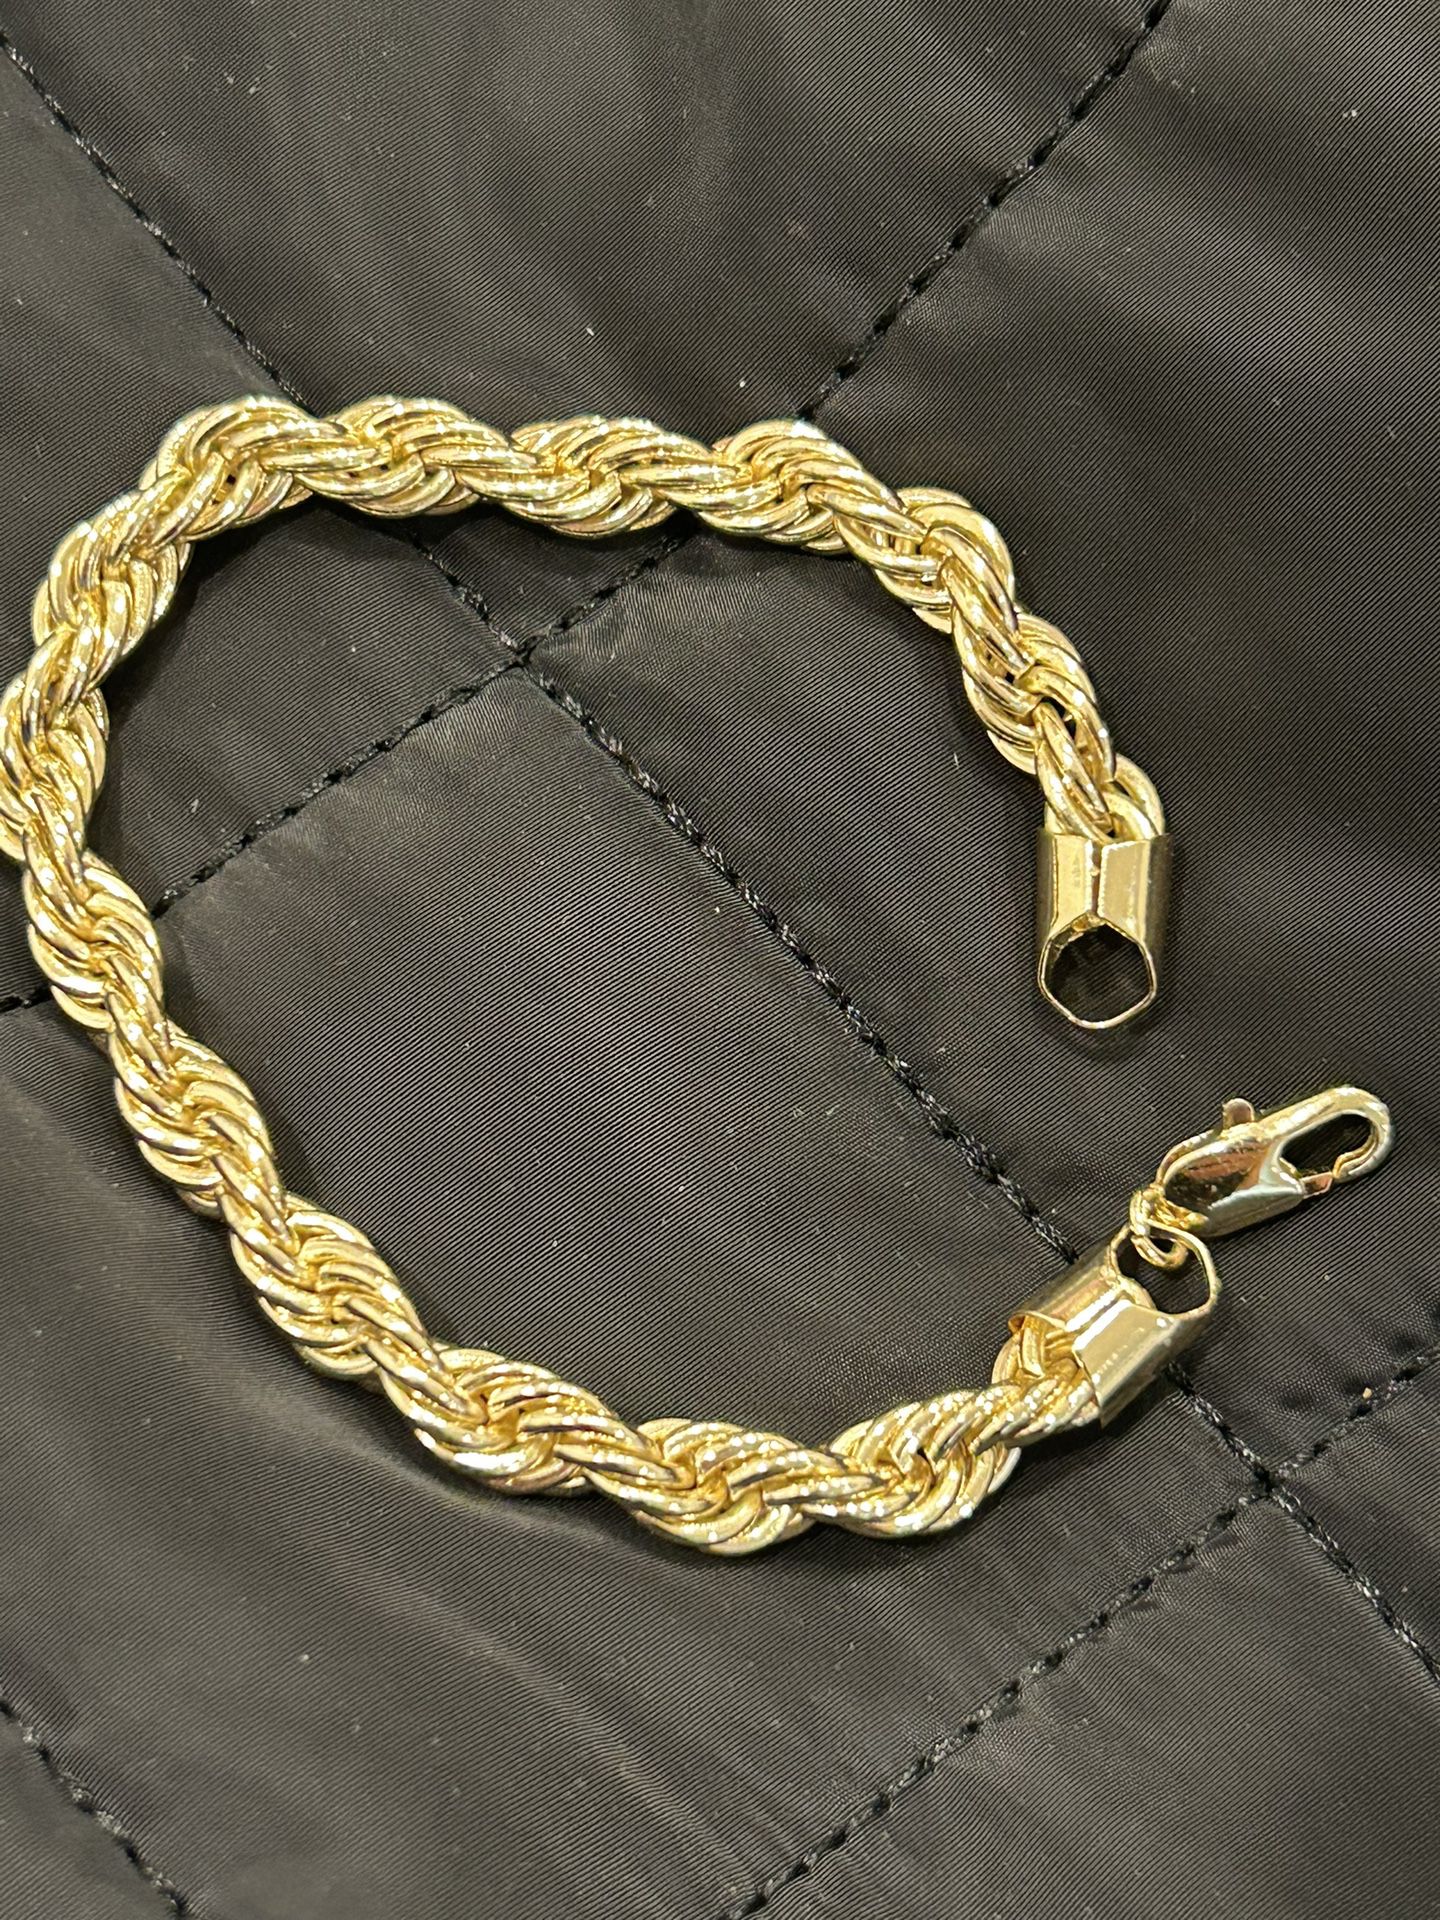 gold plated rope bracelet